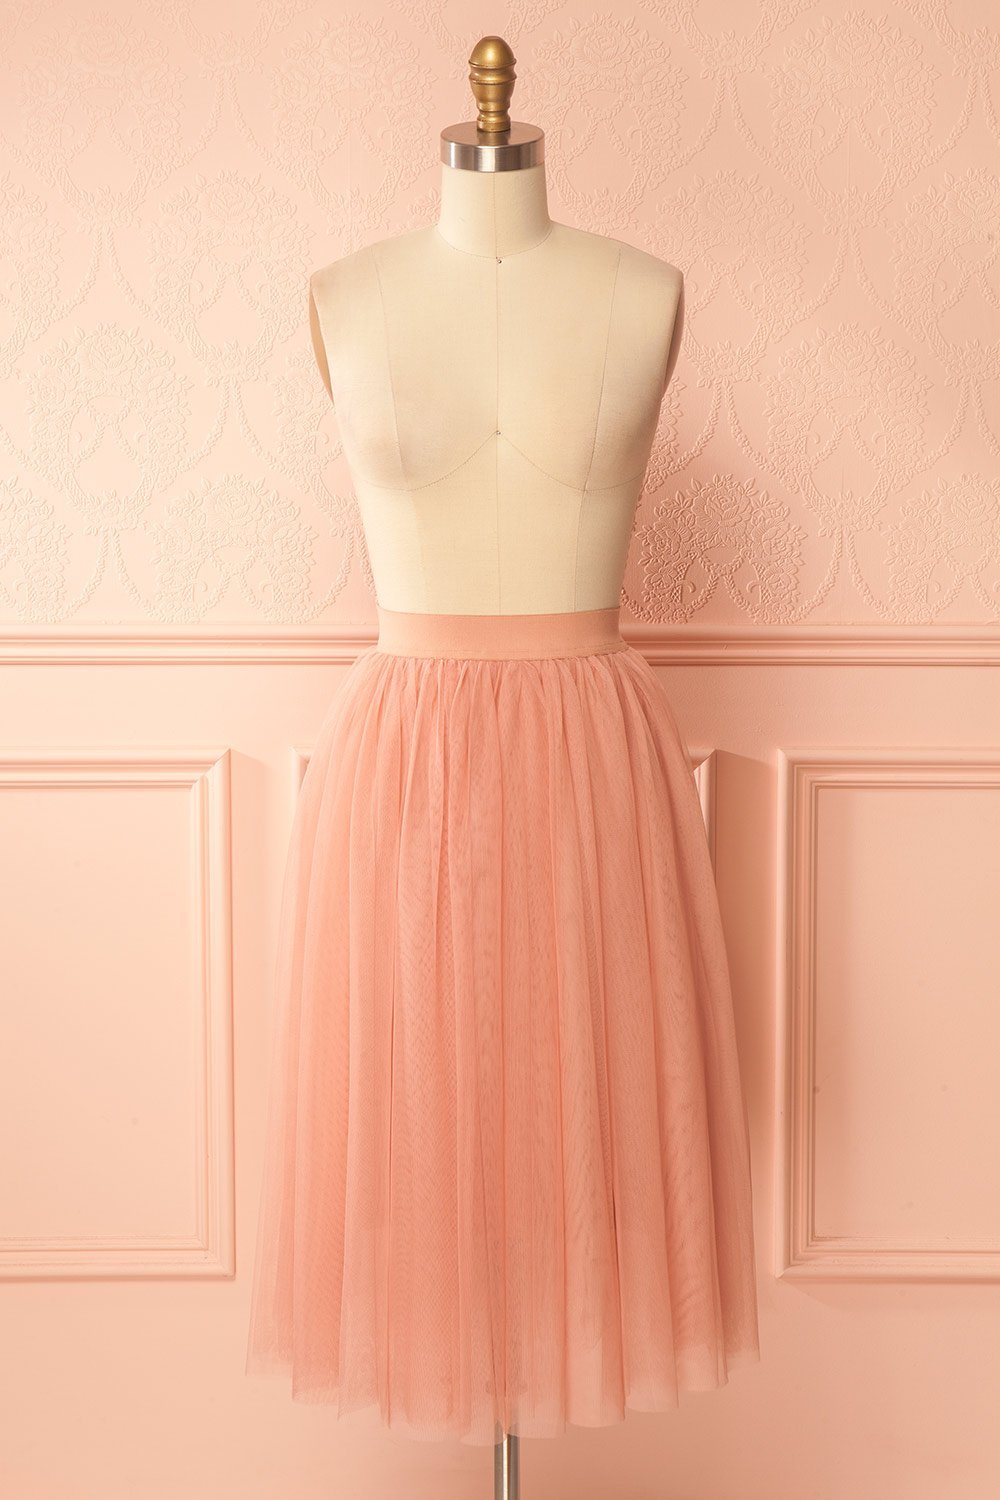 Aurelia Rose Light Pink Tulle Skirt | Boutique 1861 1